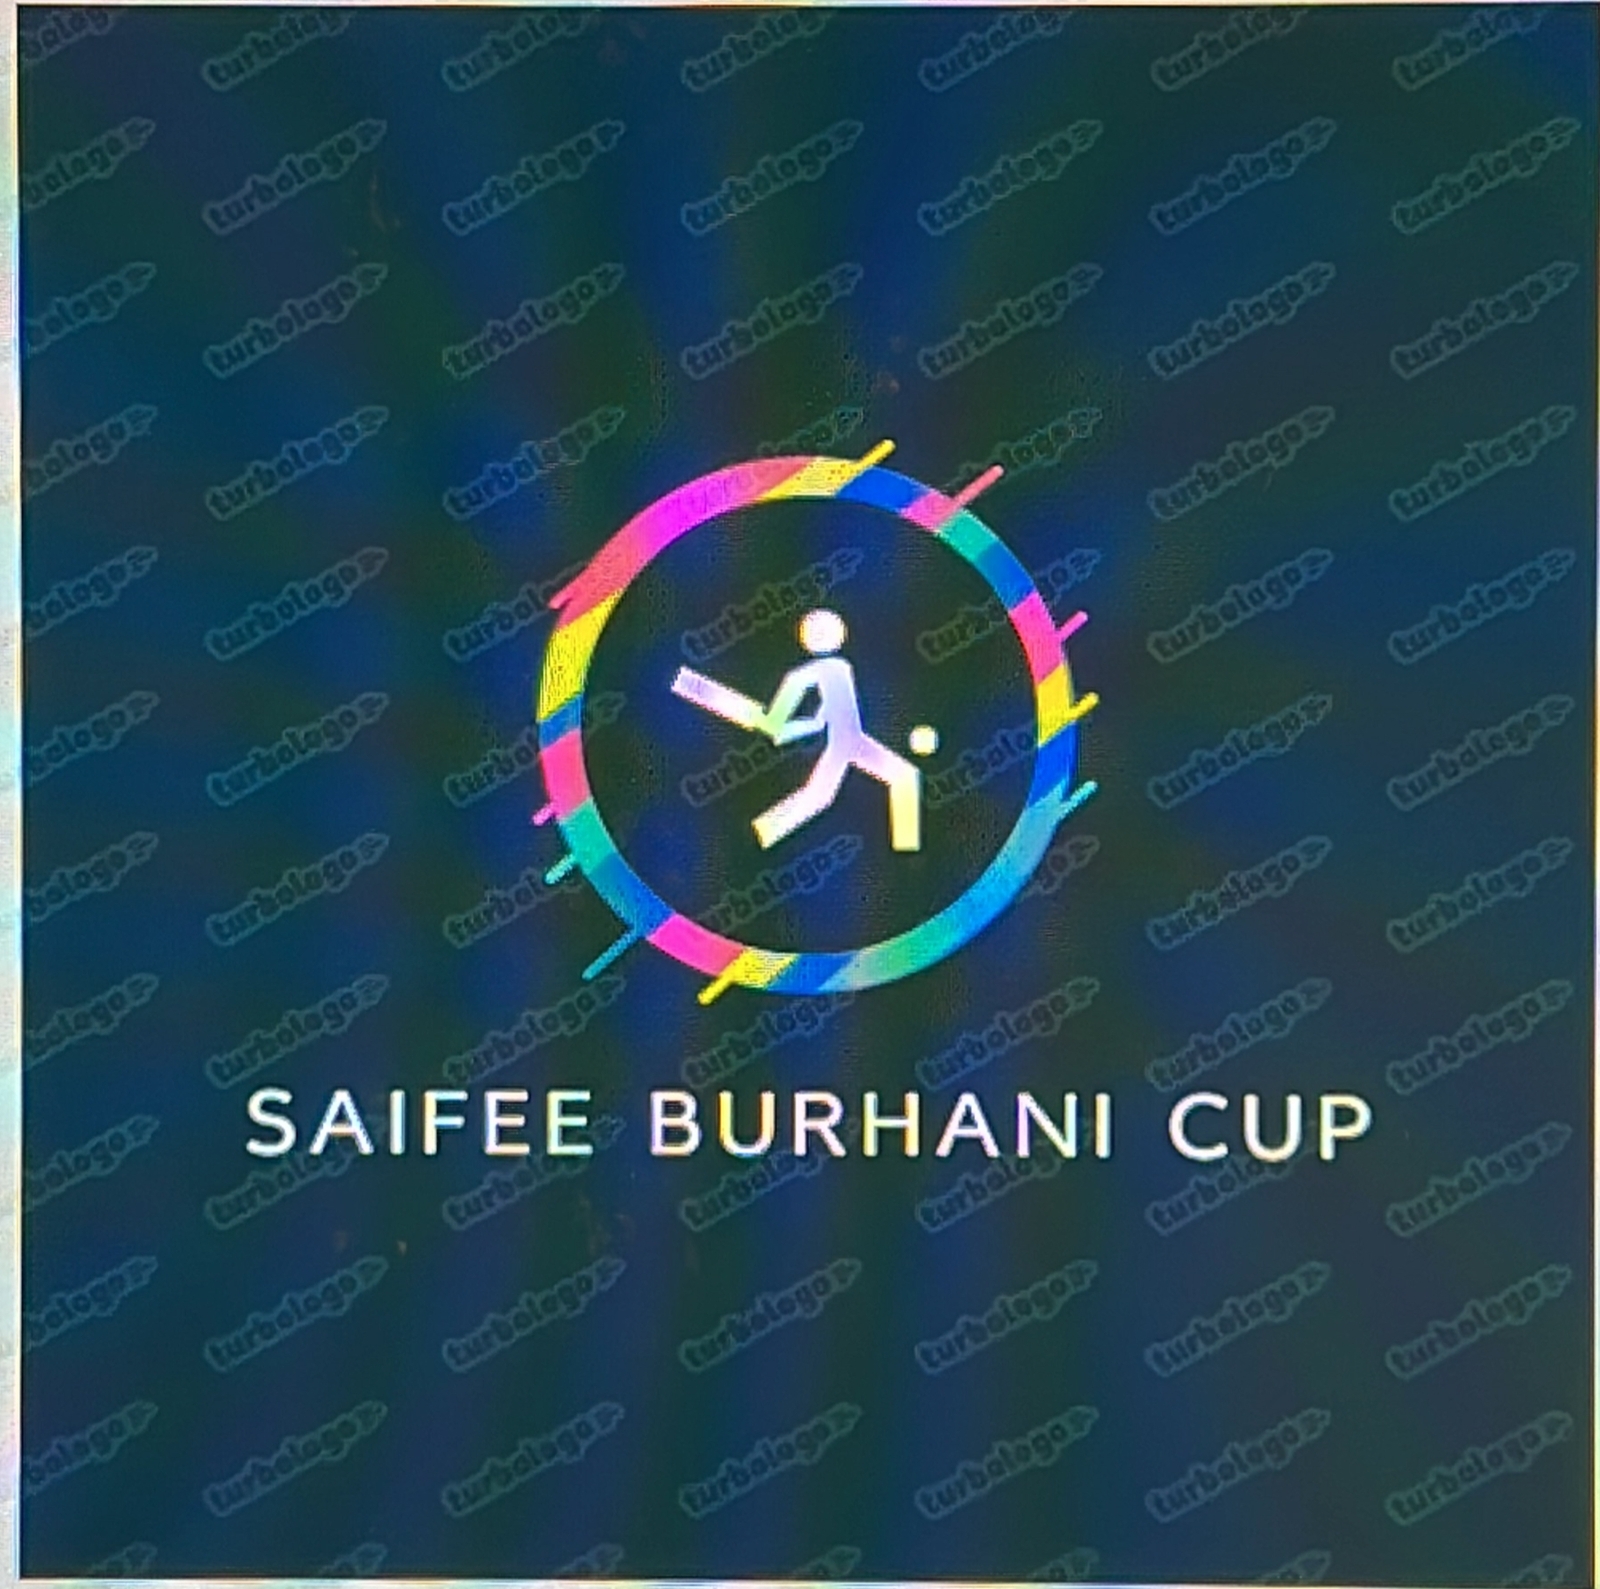 SAIFEE BURHANI CUP